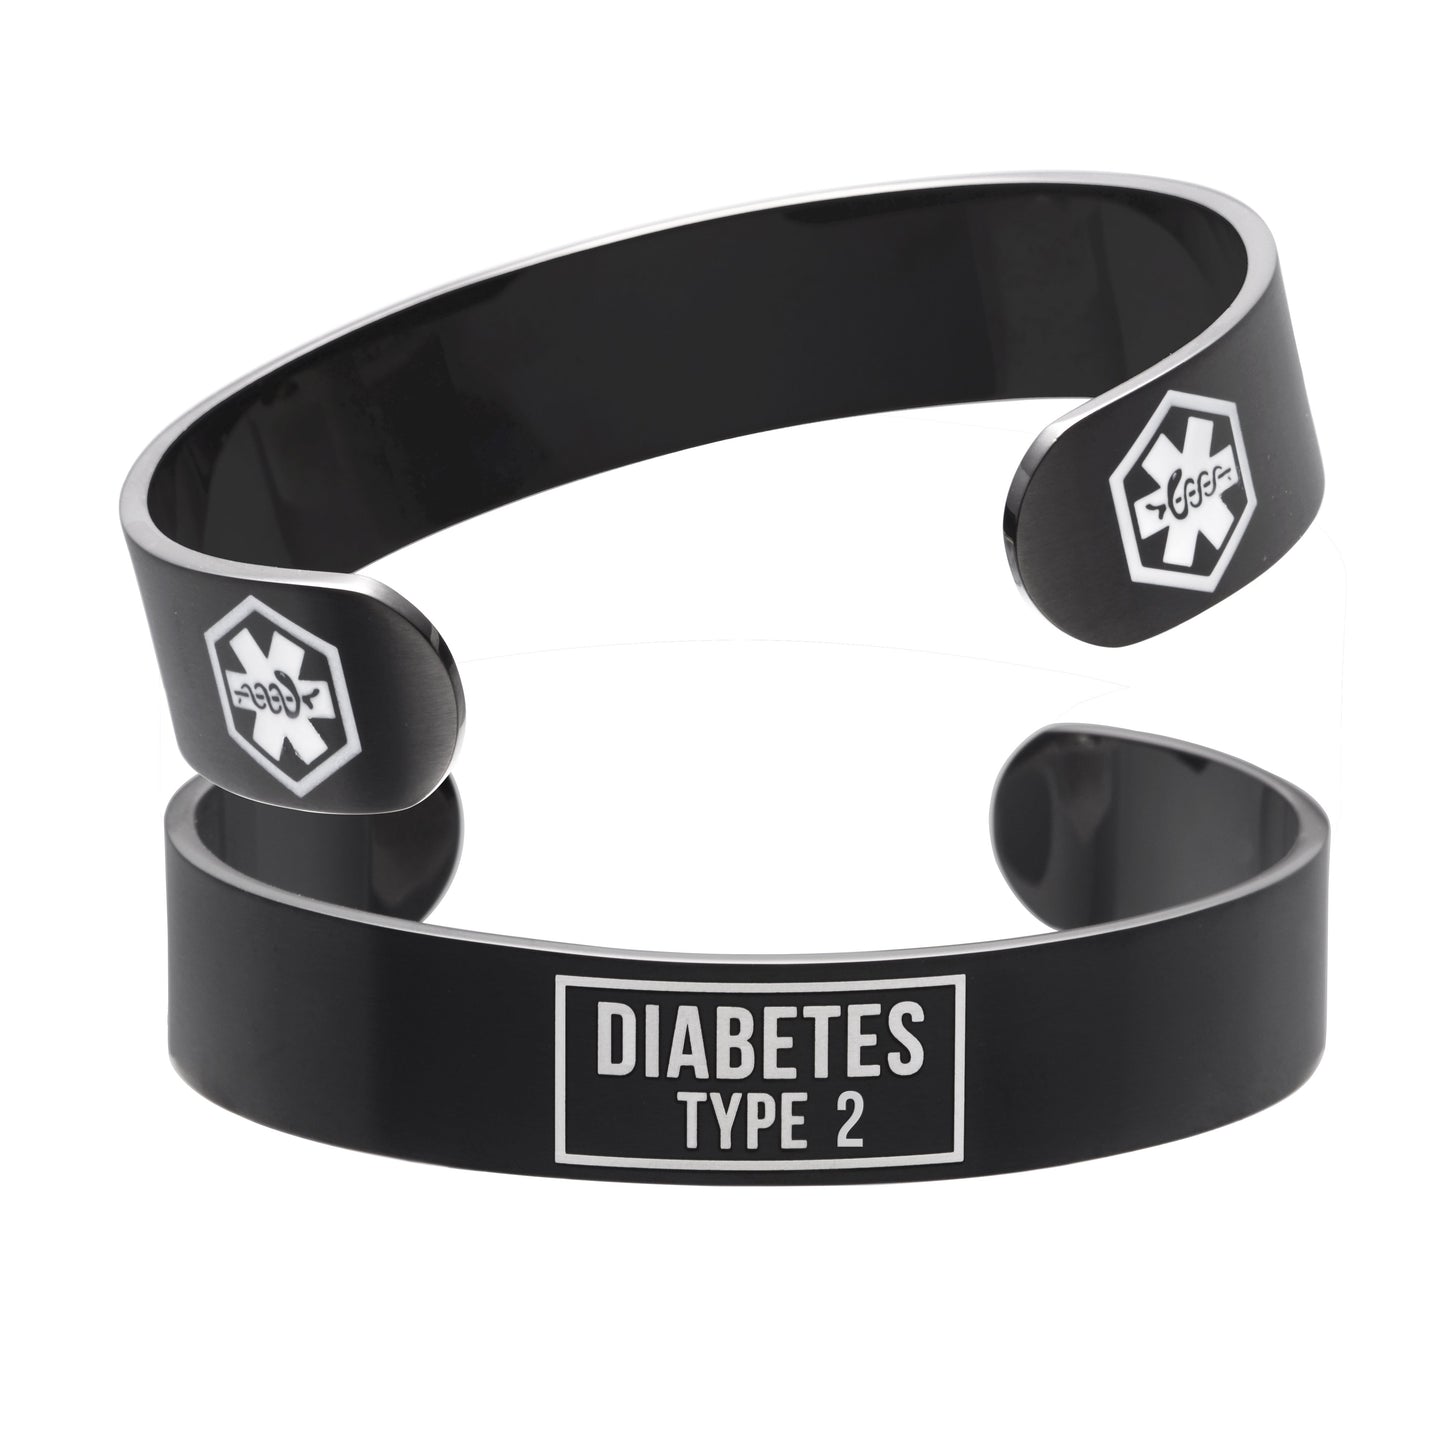 Black Medical Alert Cuff Bracelet-type 2 diabetes